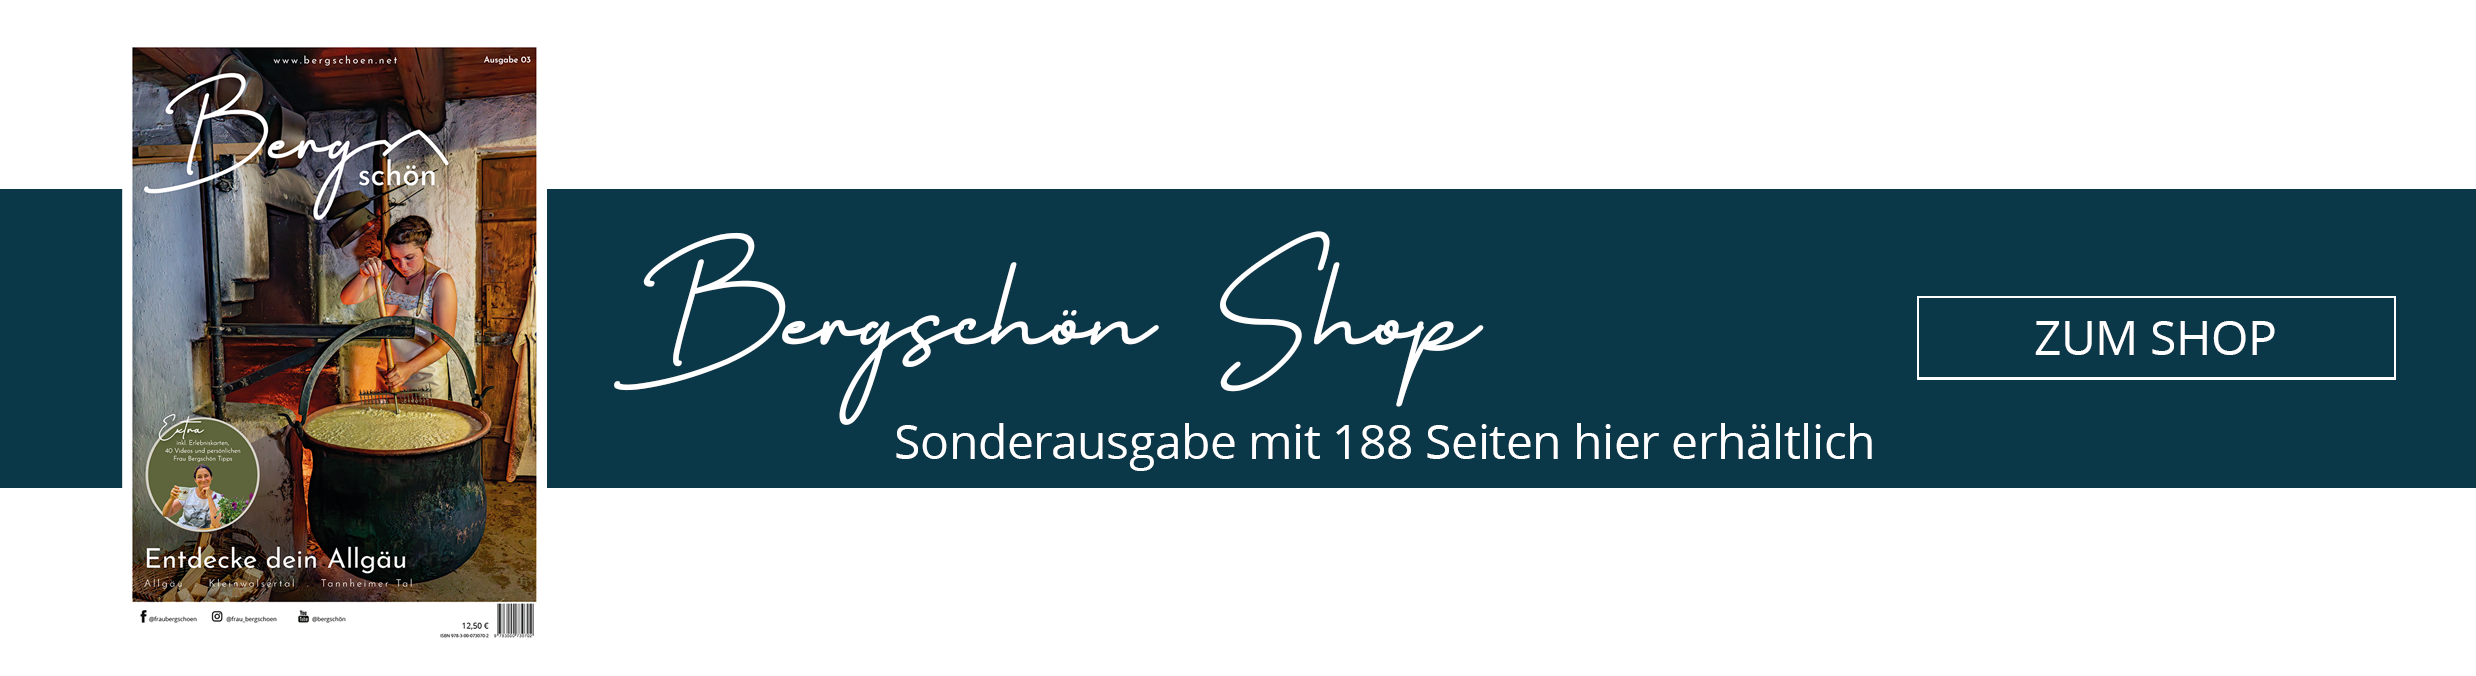 BergschÃ¶n Shop AllgÃ¤u Magazin Zeitschrift Kaufen Abo Lesen Alpen